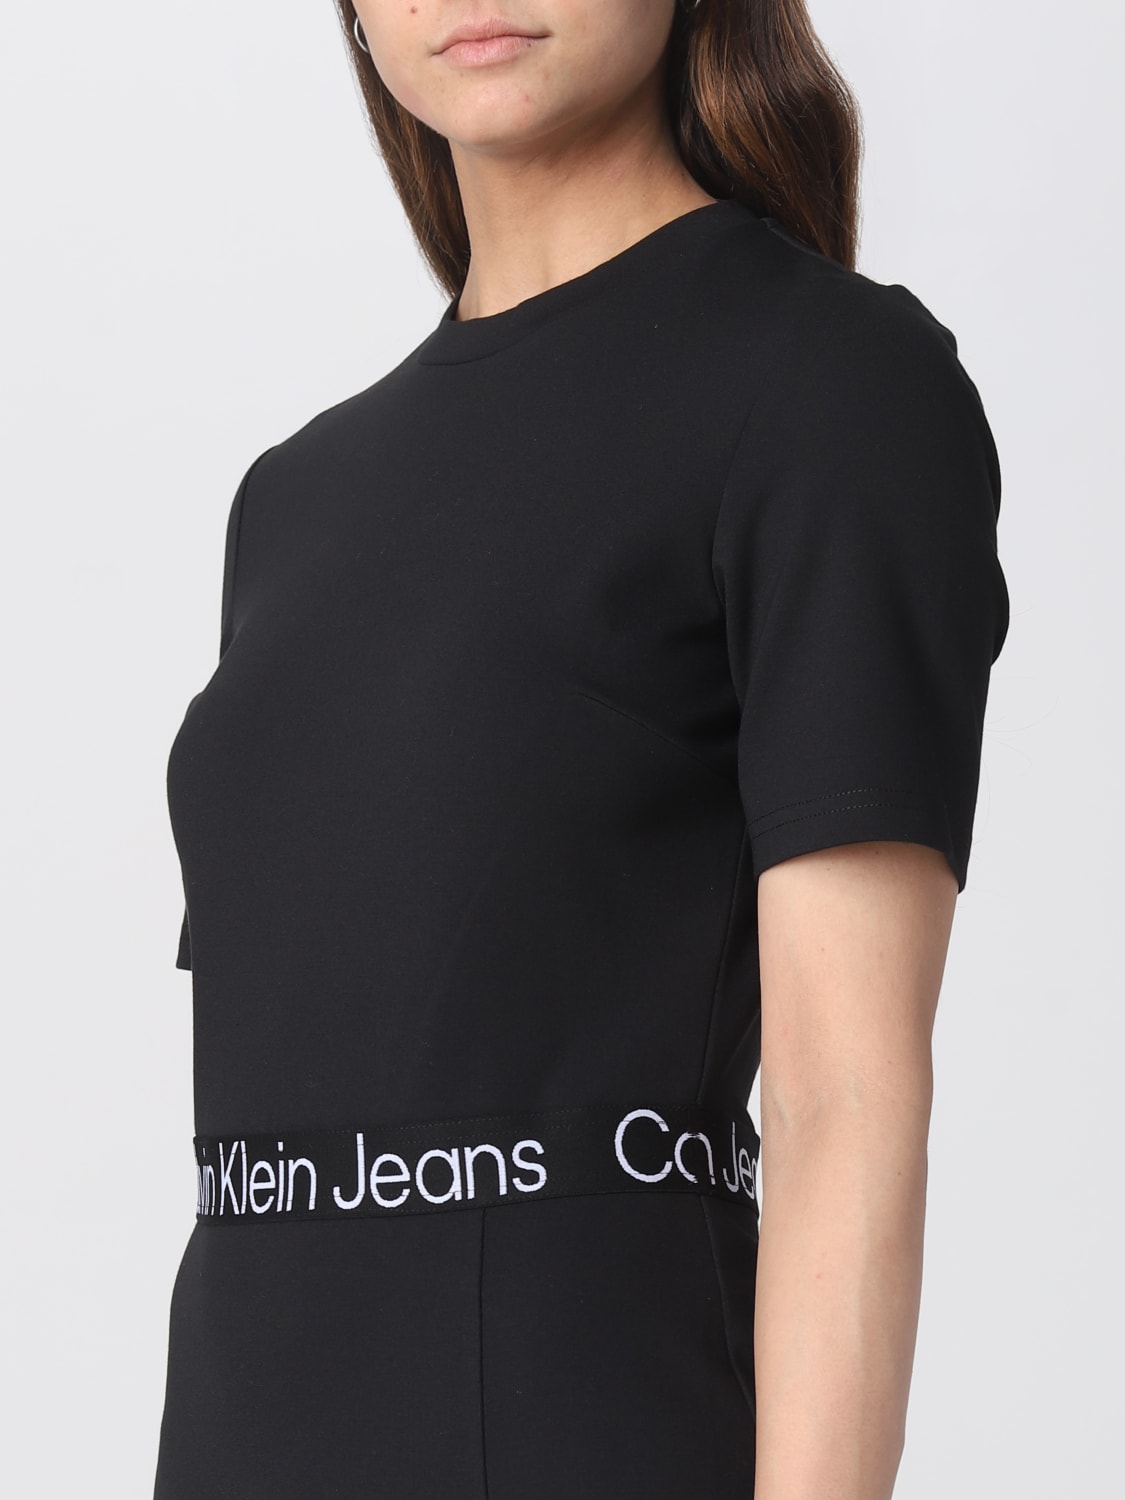 CALVIN KLEIN JEANS: dress for women - Black | Calvin Klein Jeans dress ...